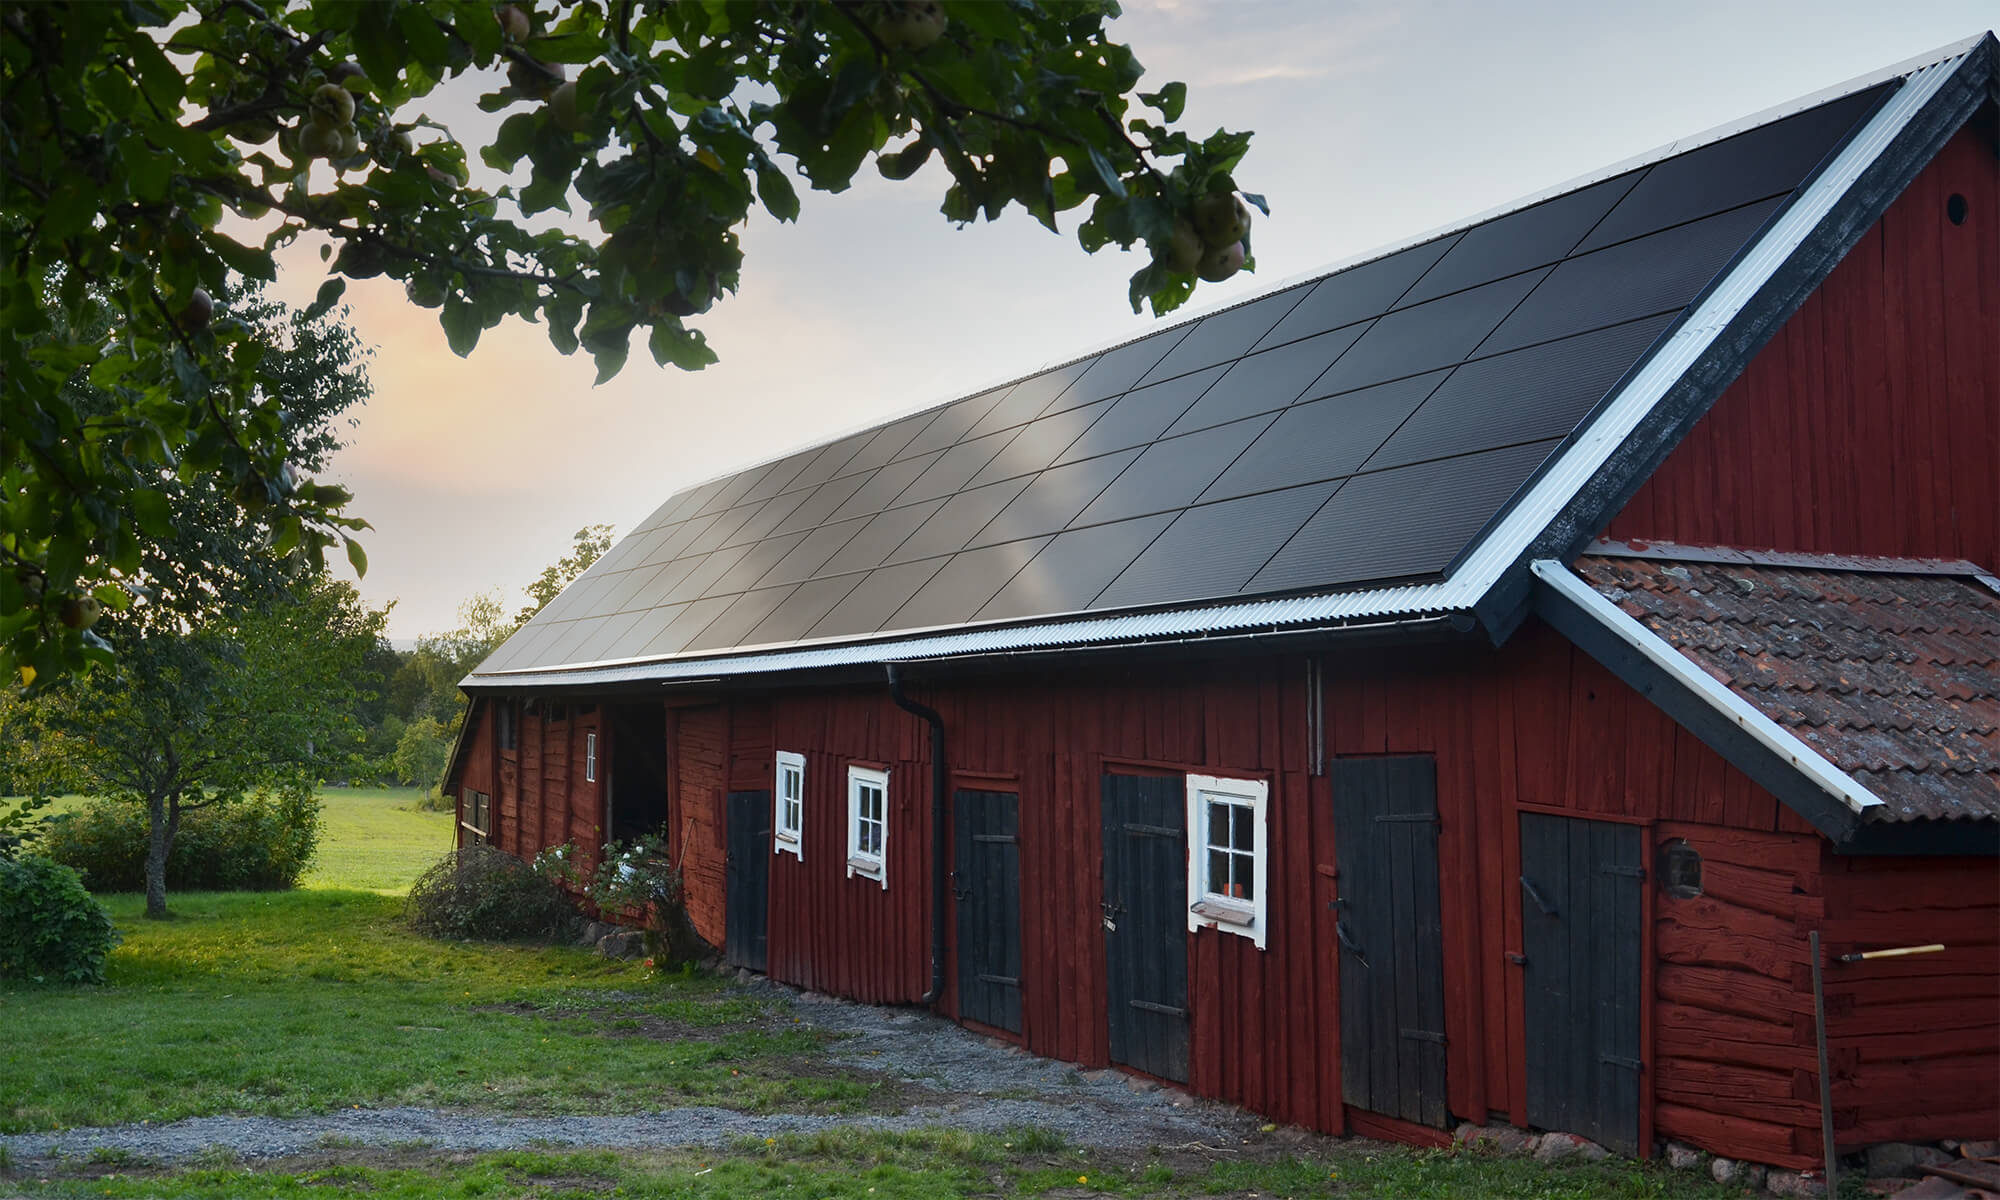 Falköping: the solar potential of green farms